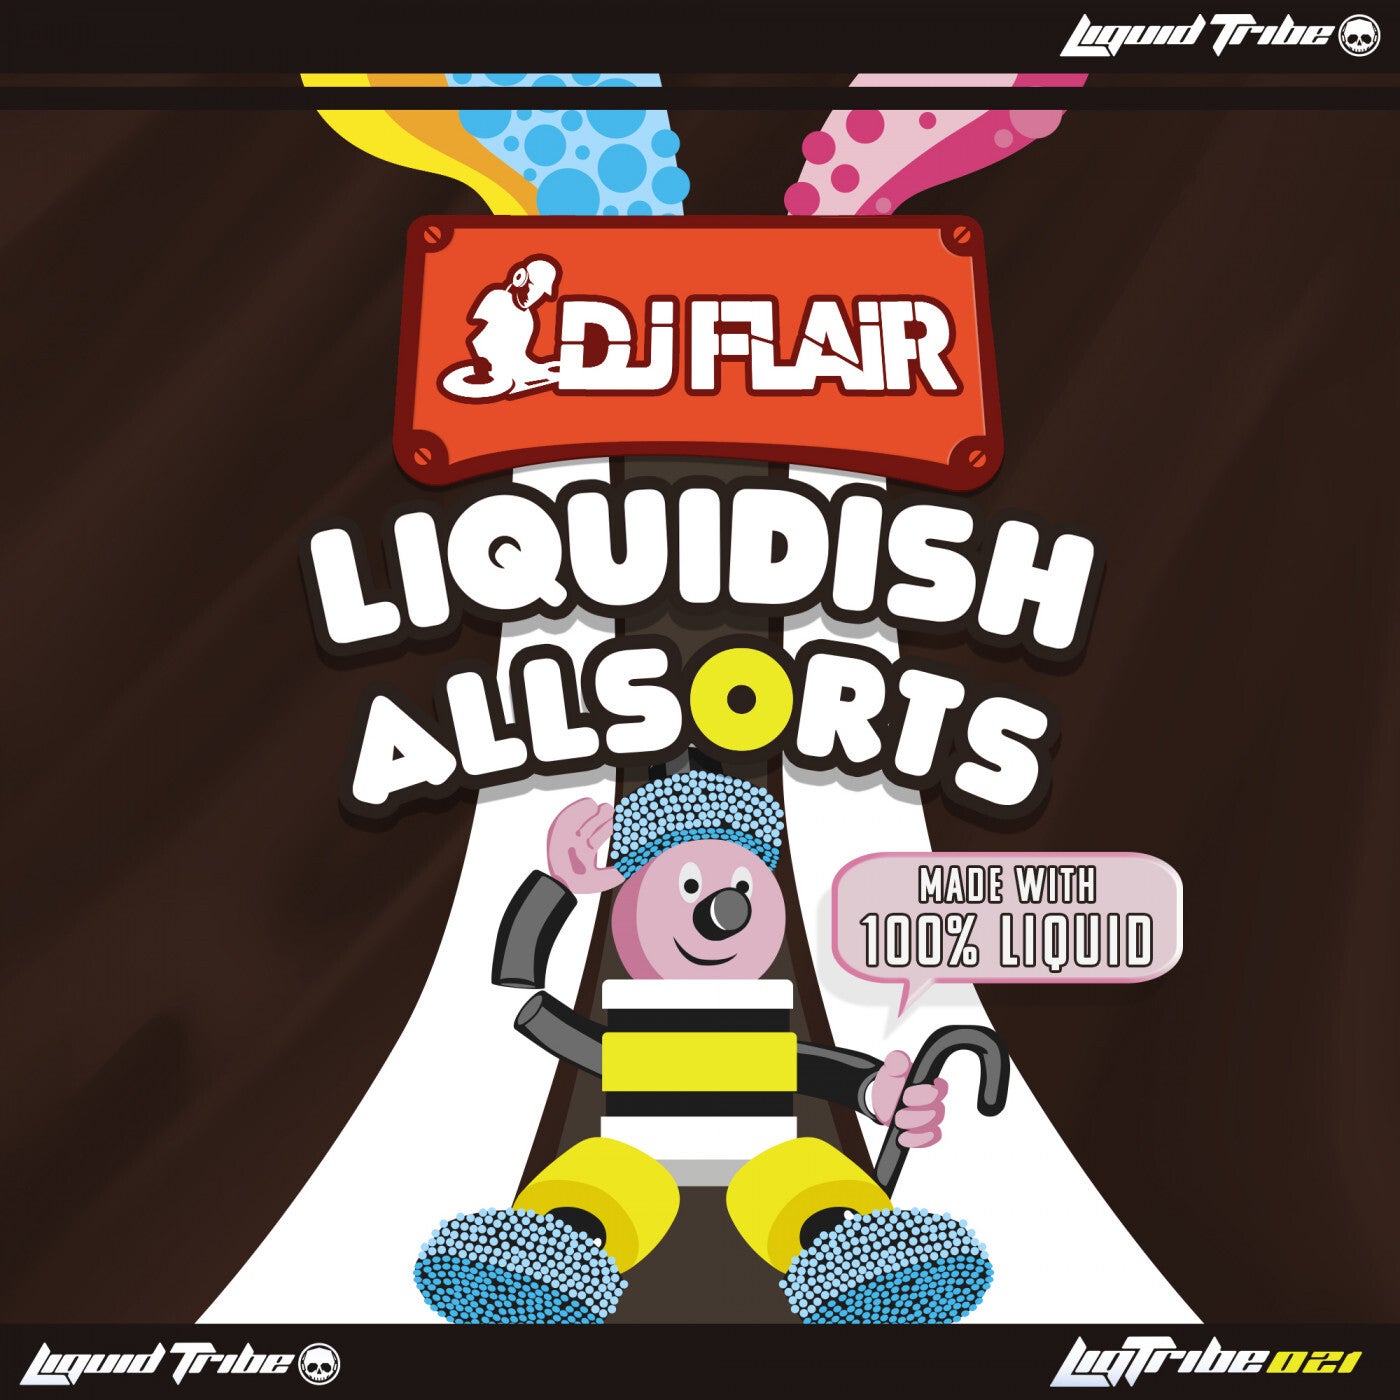 Liquidish Allsorts EP